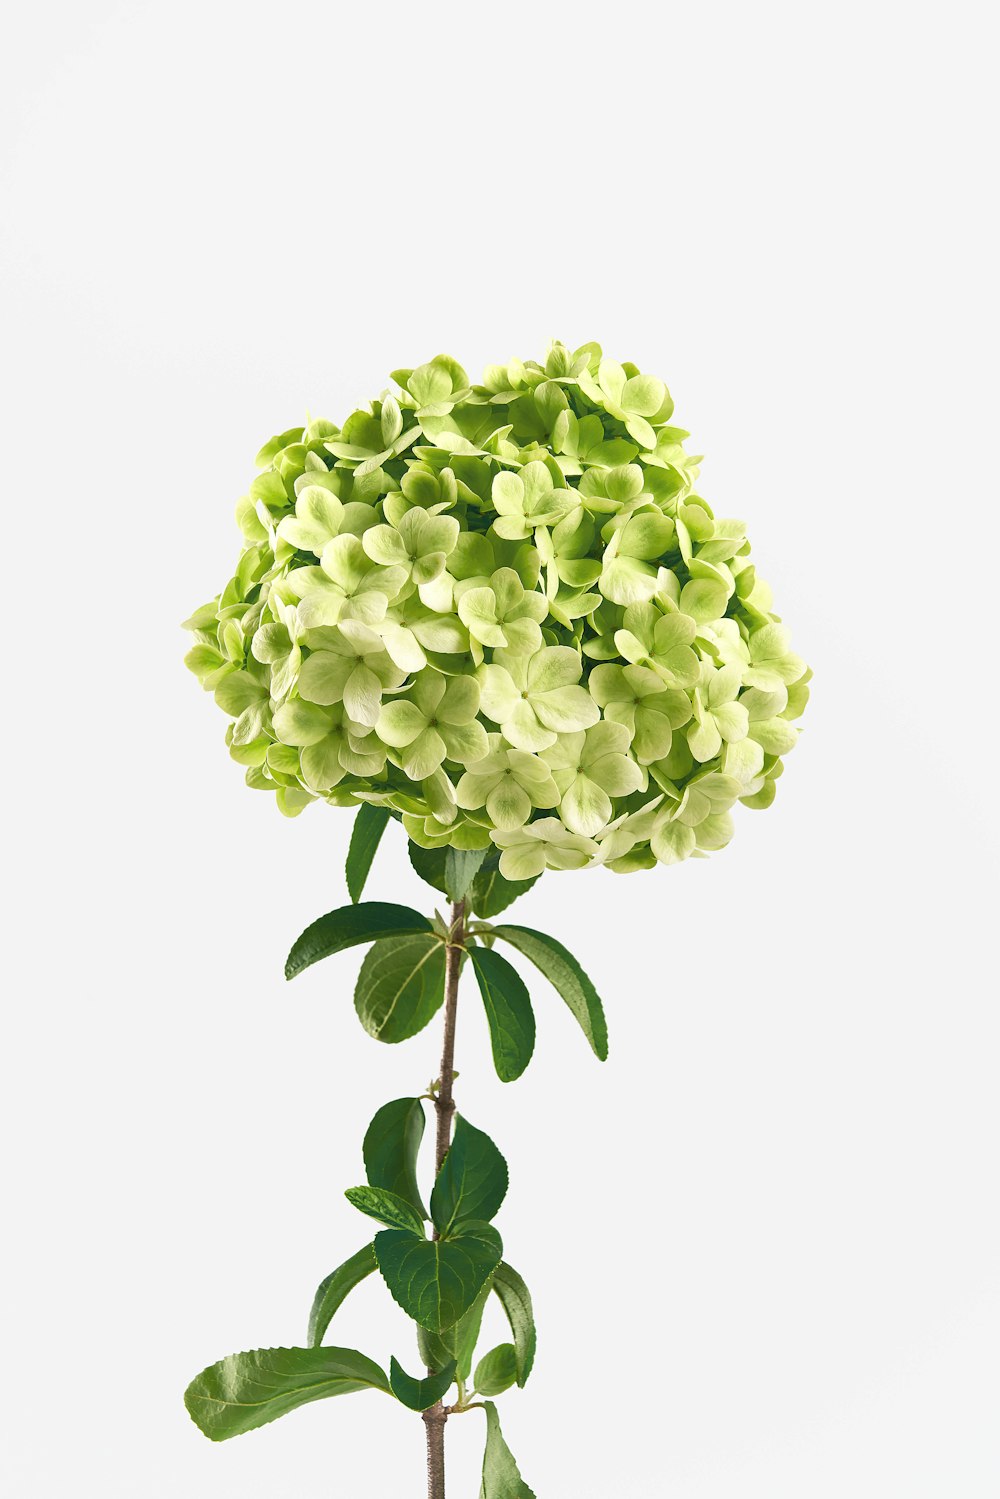 green hydrangea flowers photo – Free Flower Image on Unsplash